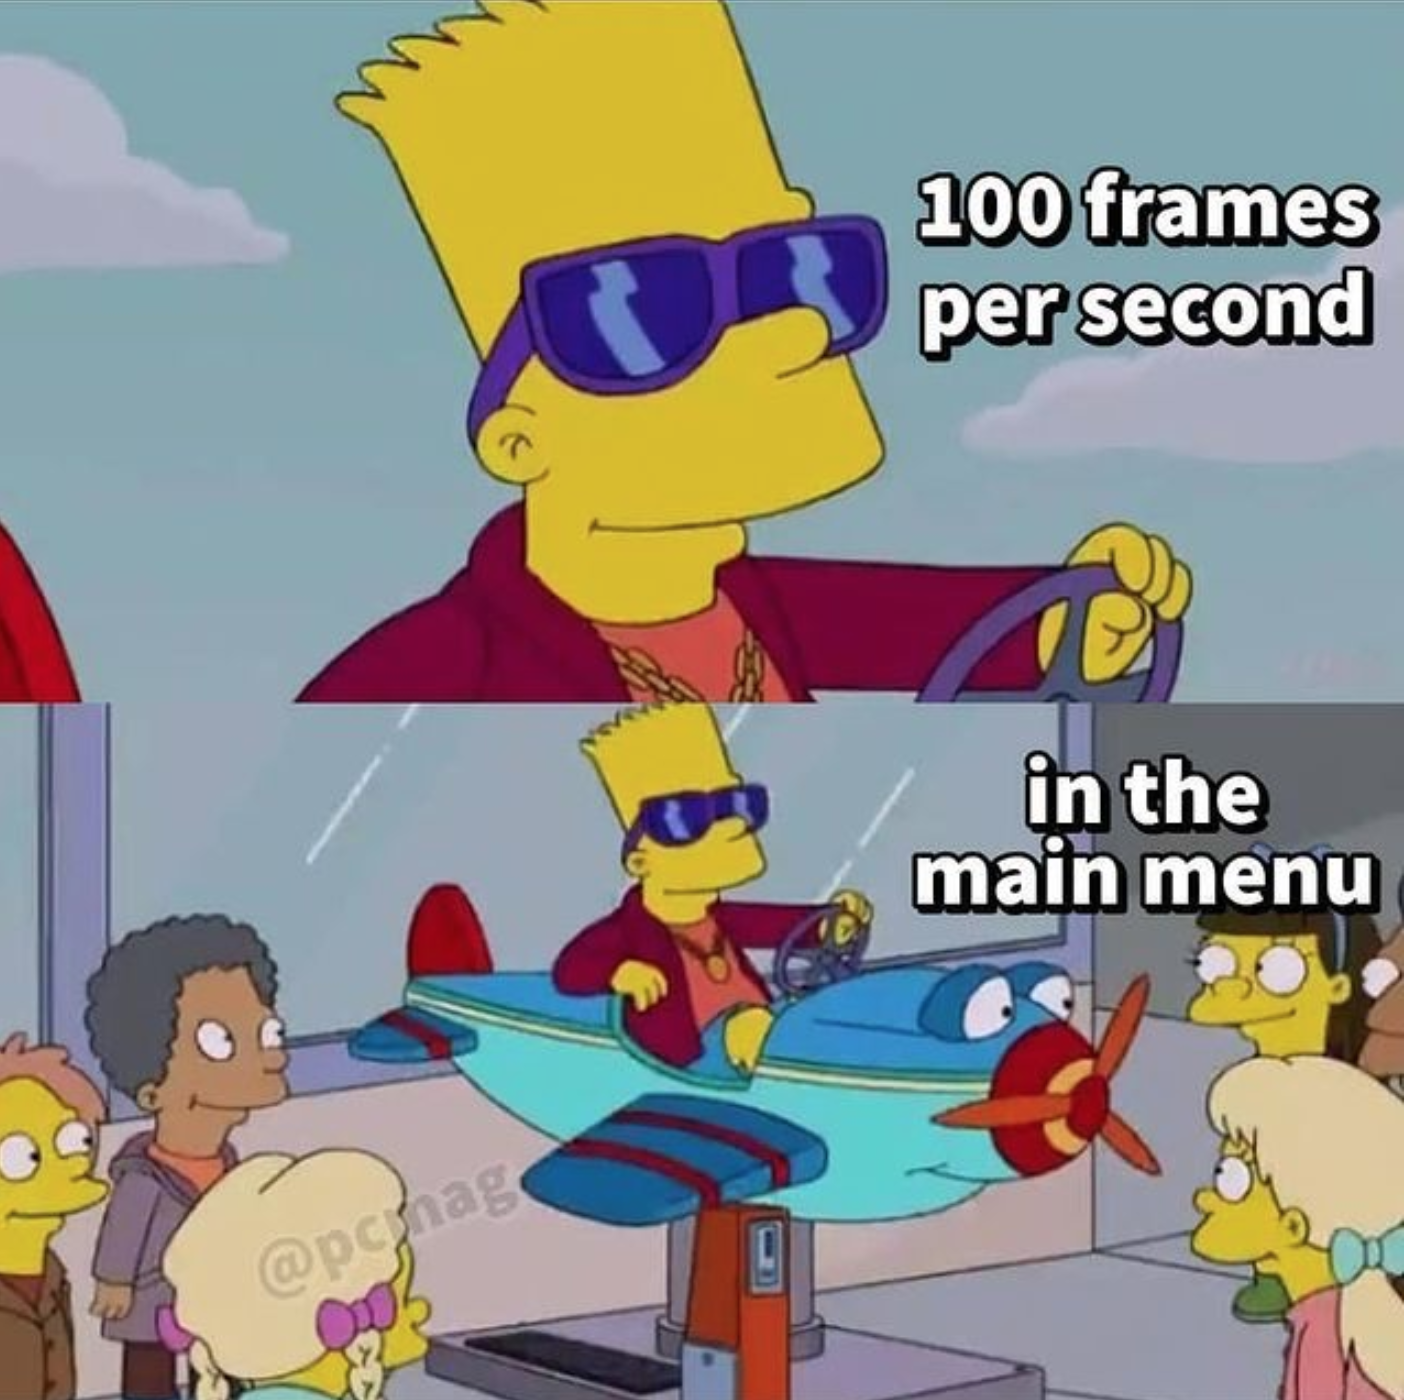 funny gaming memes - bart in plane meme template - 100 frames per second in the main menu